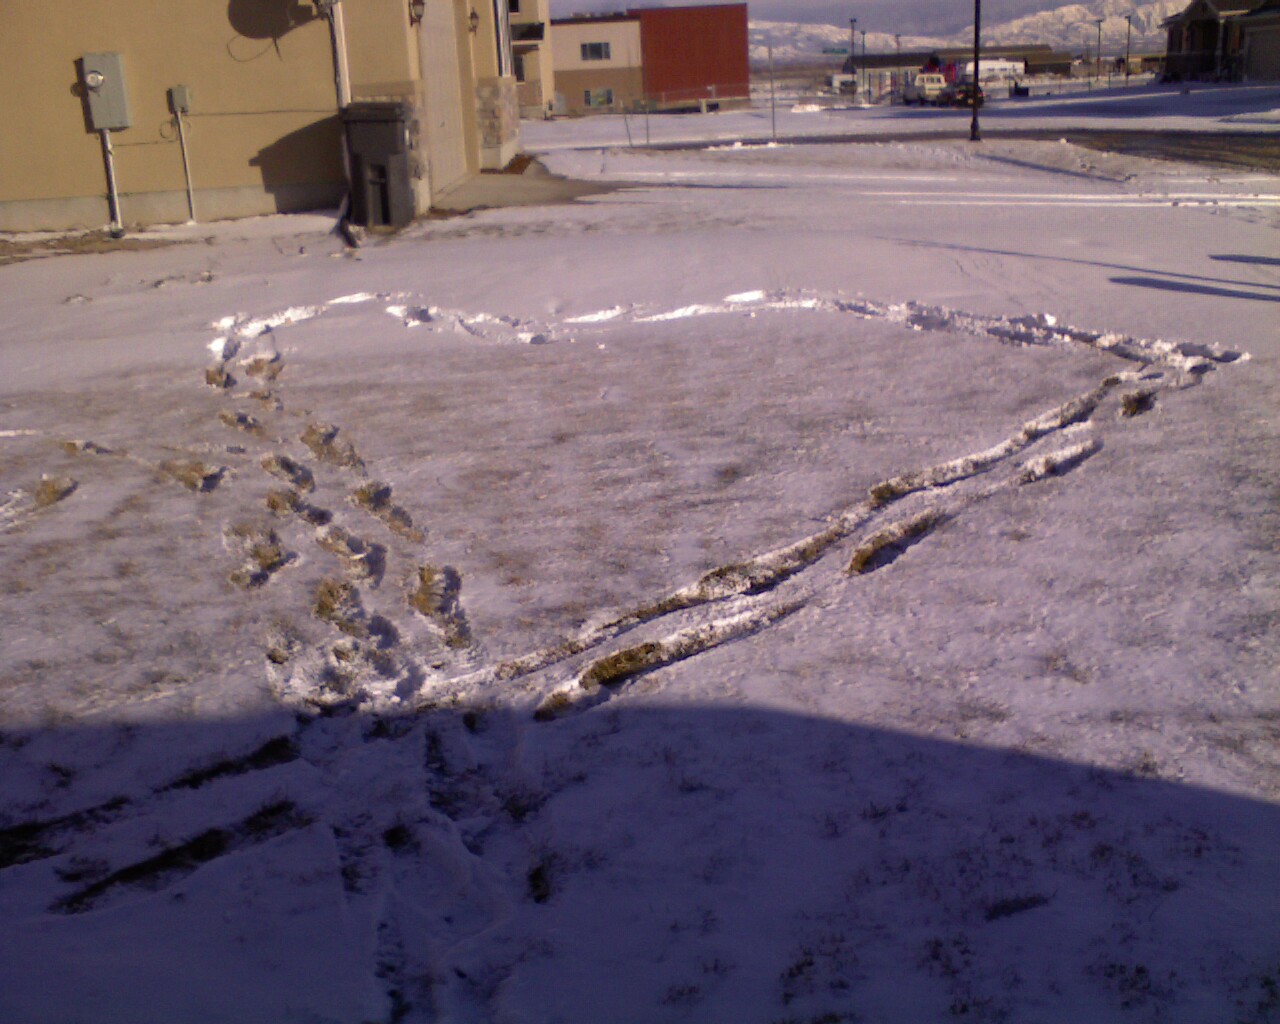 [ryans+heart+in+the+snow+2.JPG]